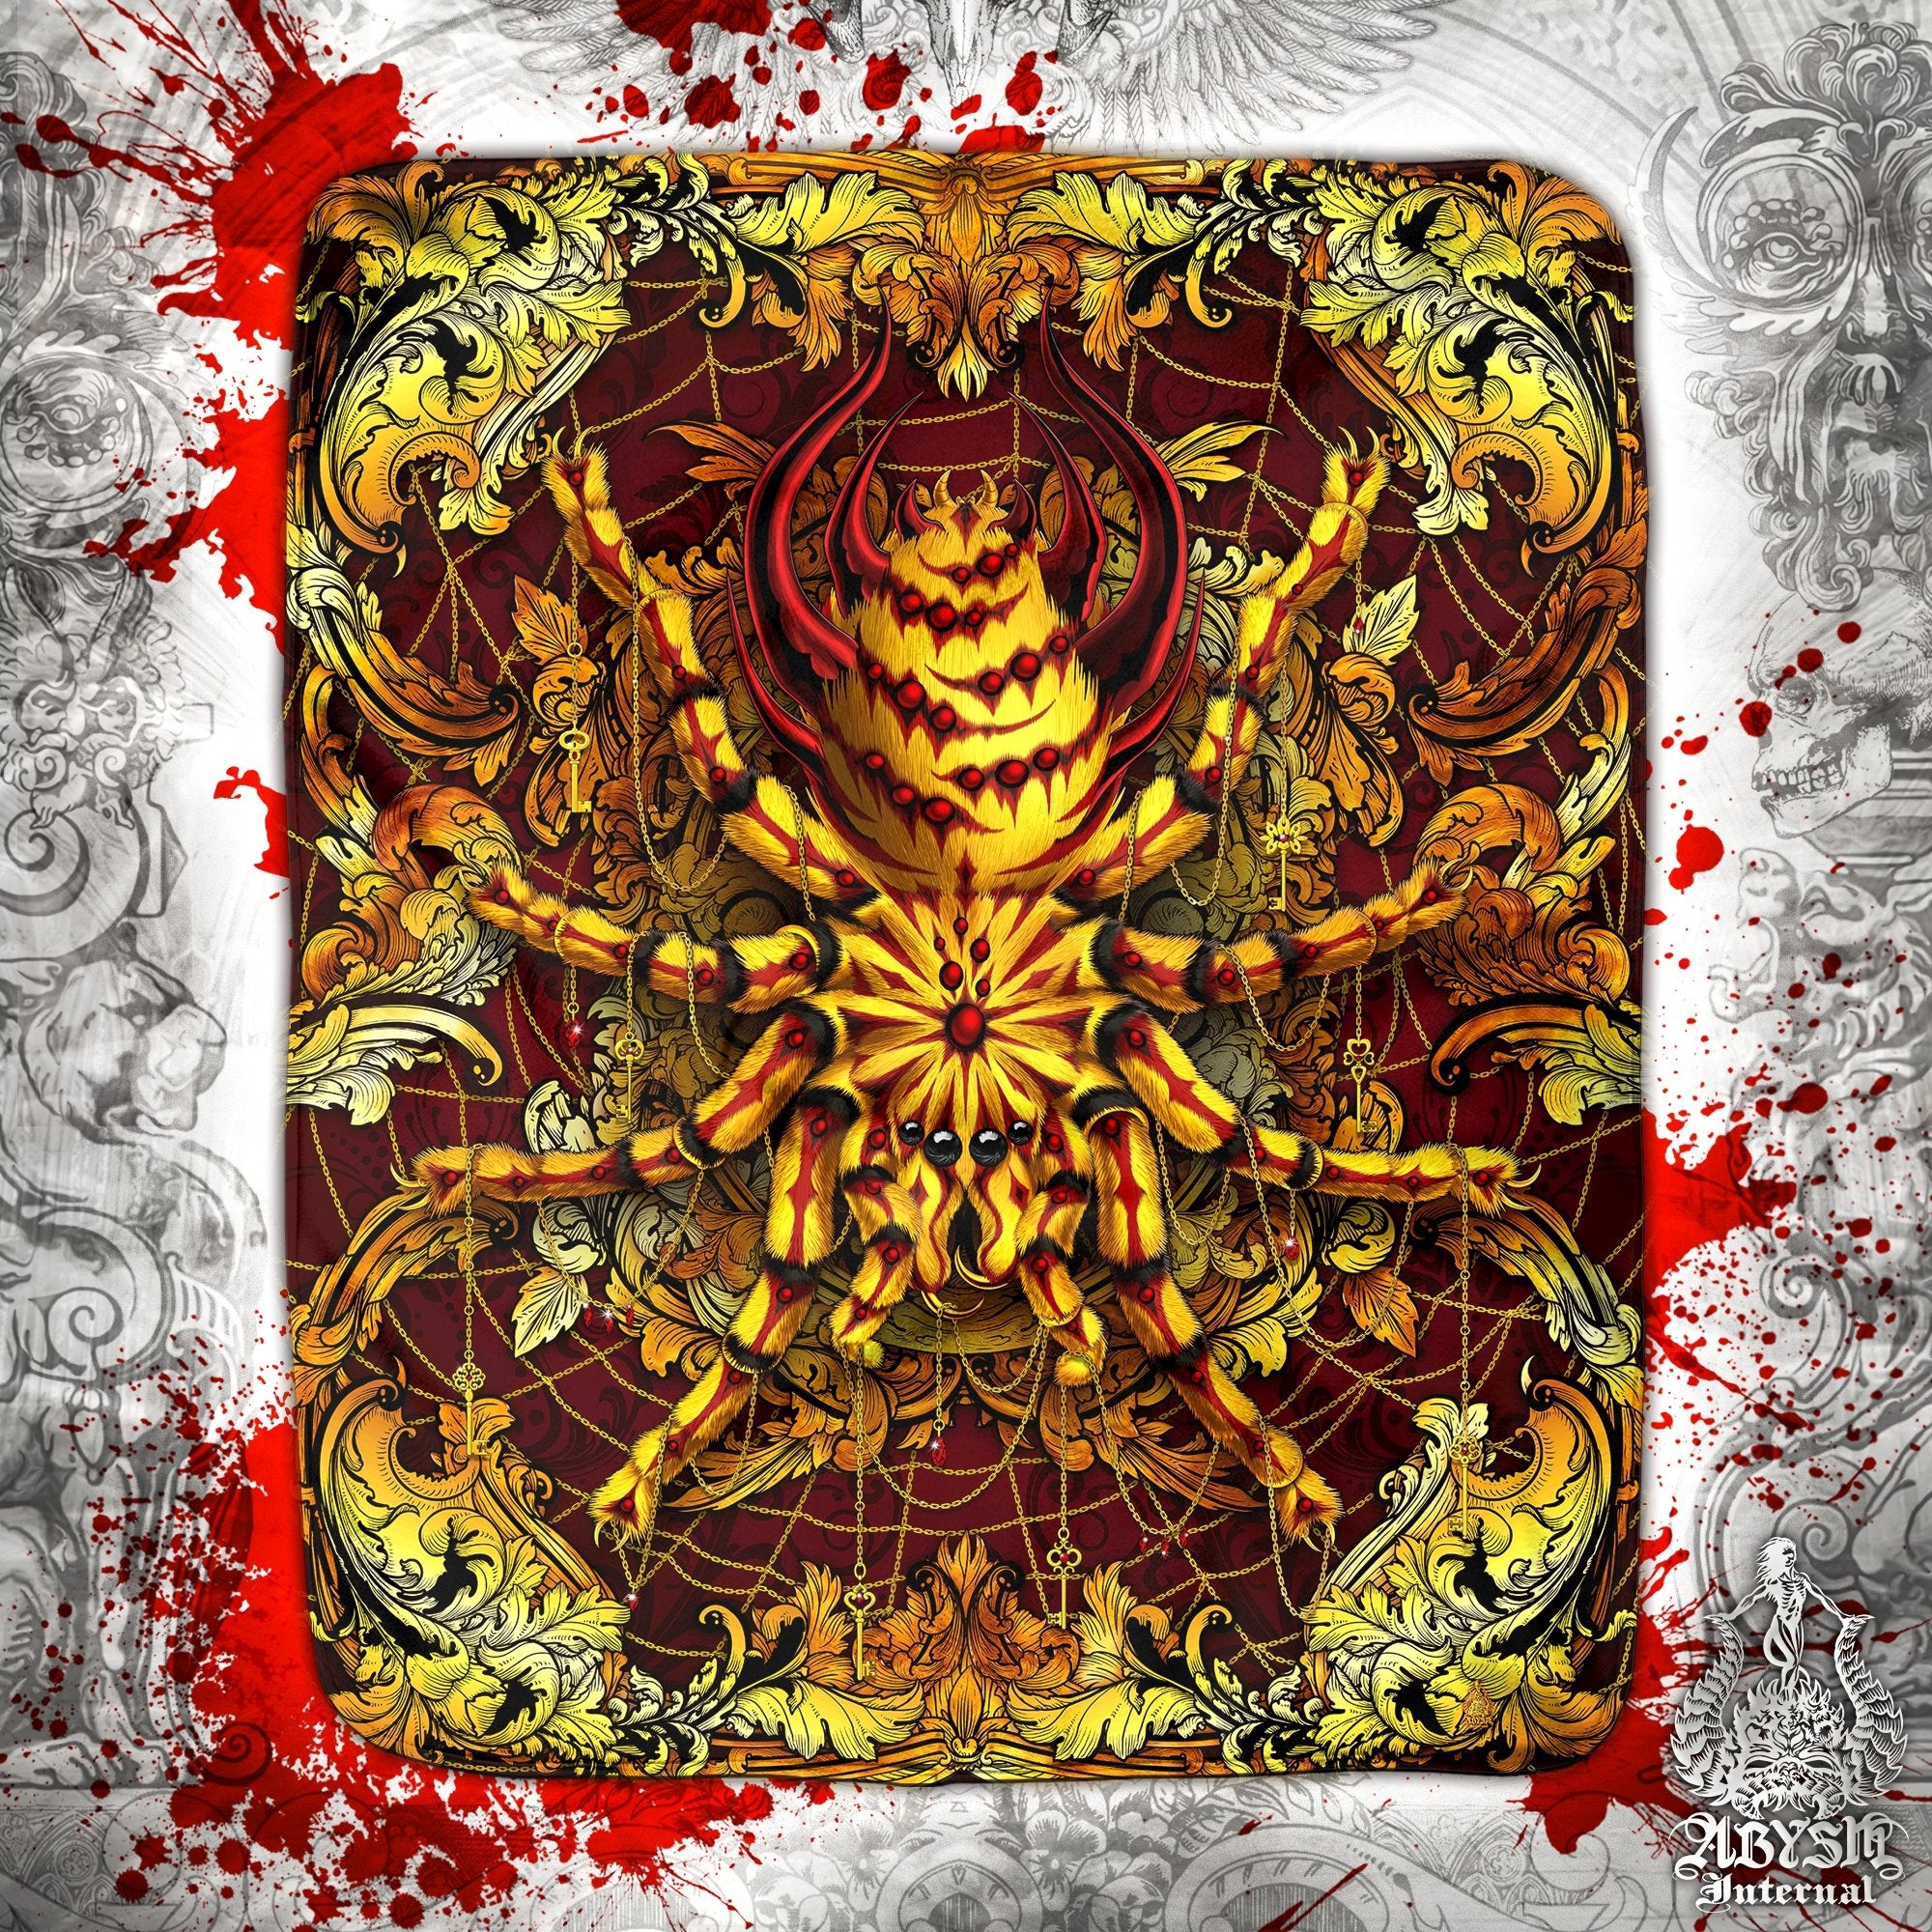 Spider Throw Fleece Blanket, Indie Home Decor, Unique Gift - Gold Red, Tarantula Art - Abysm Internal